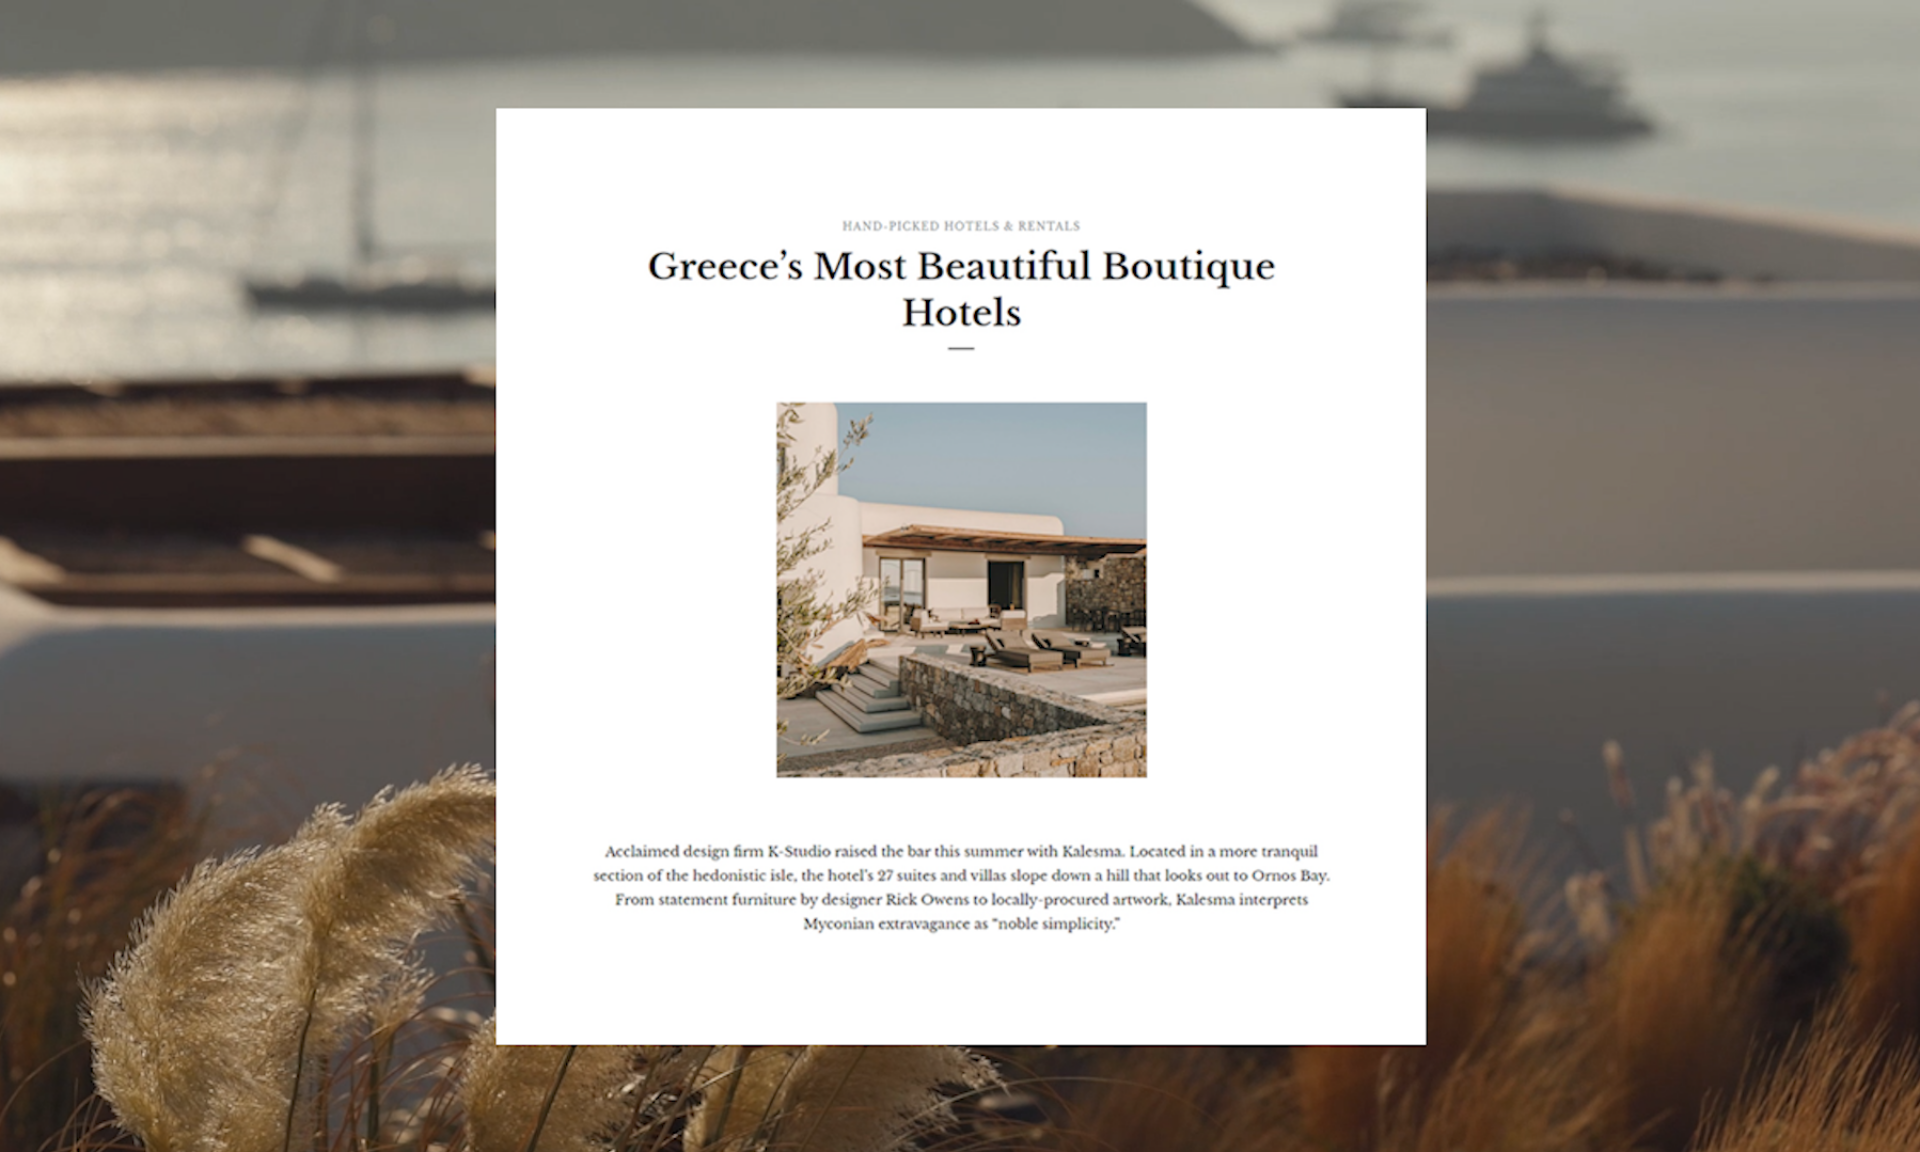 Kalesma among Greece’s Most Beautiful Boutique Hotels